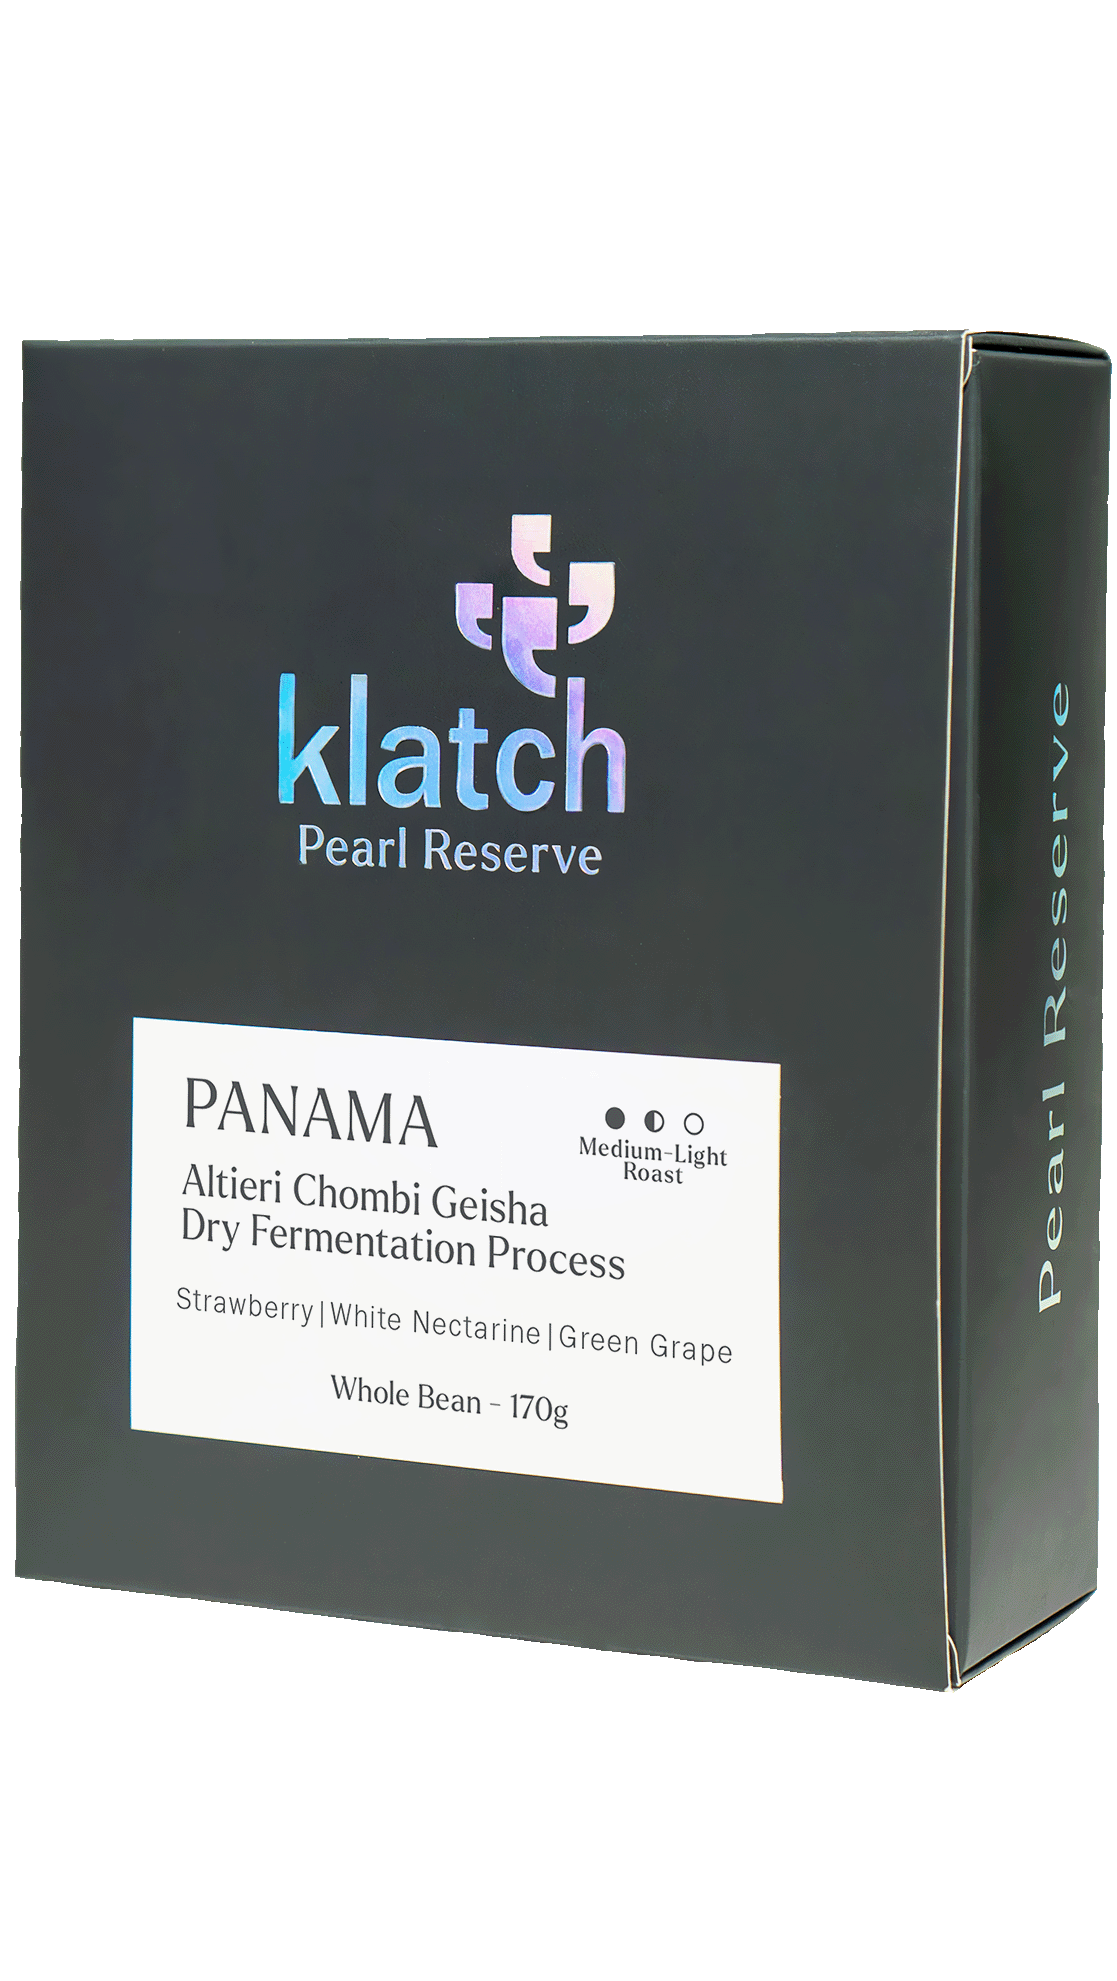 Panama Altieri Chombi Geisha Dry Fermentation Process